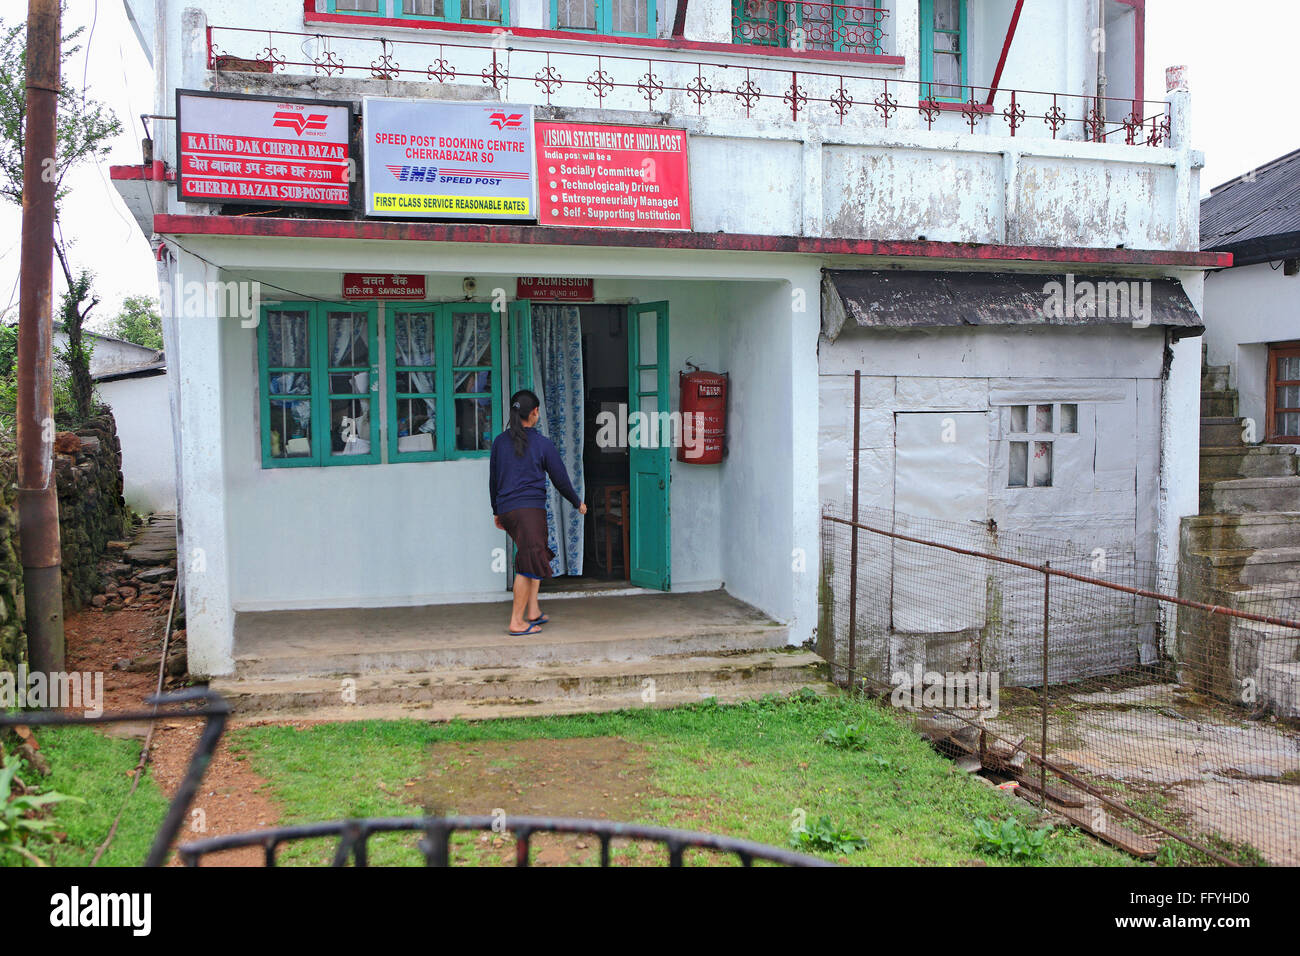 Cherra bazaar sub post office ; Cherrapunji ; Sohra ; Meghalaya ; India Stock Photo